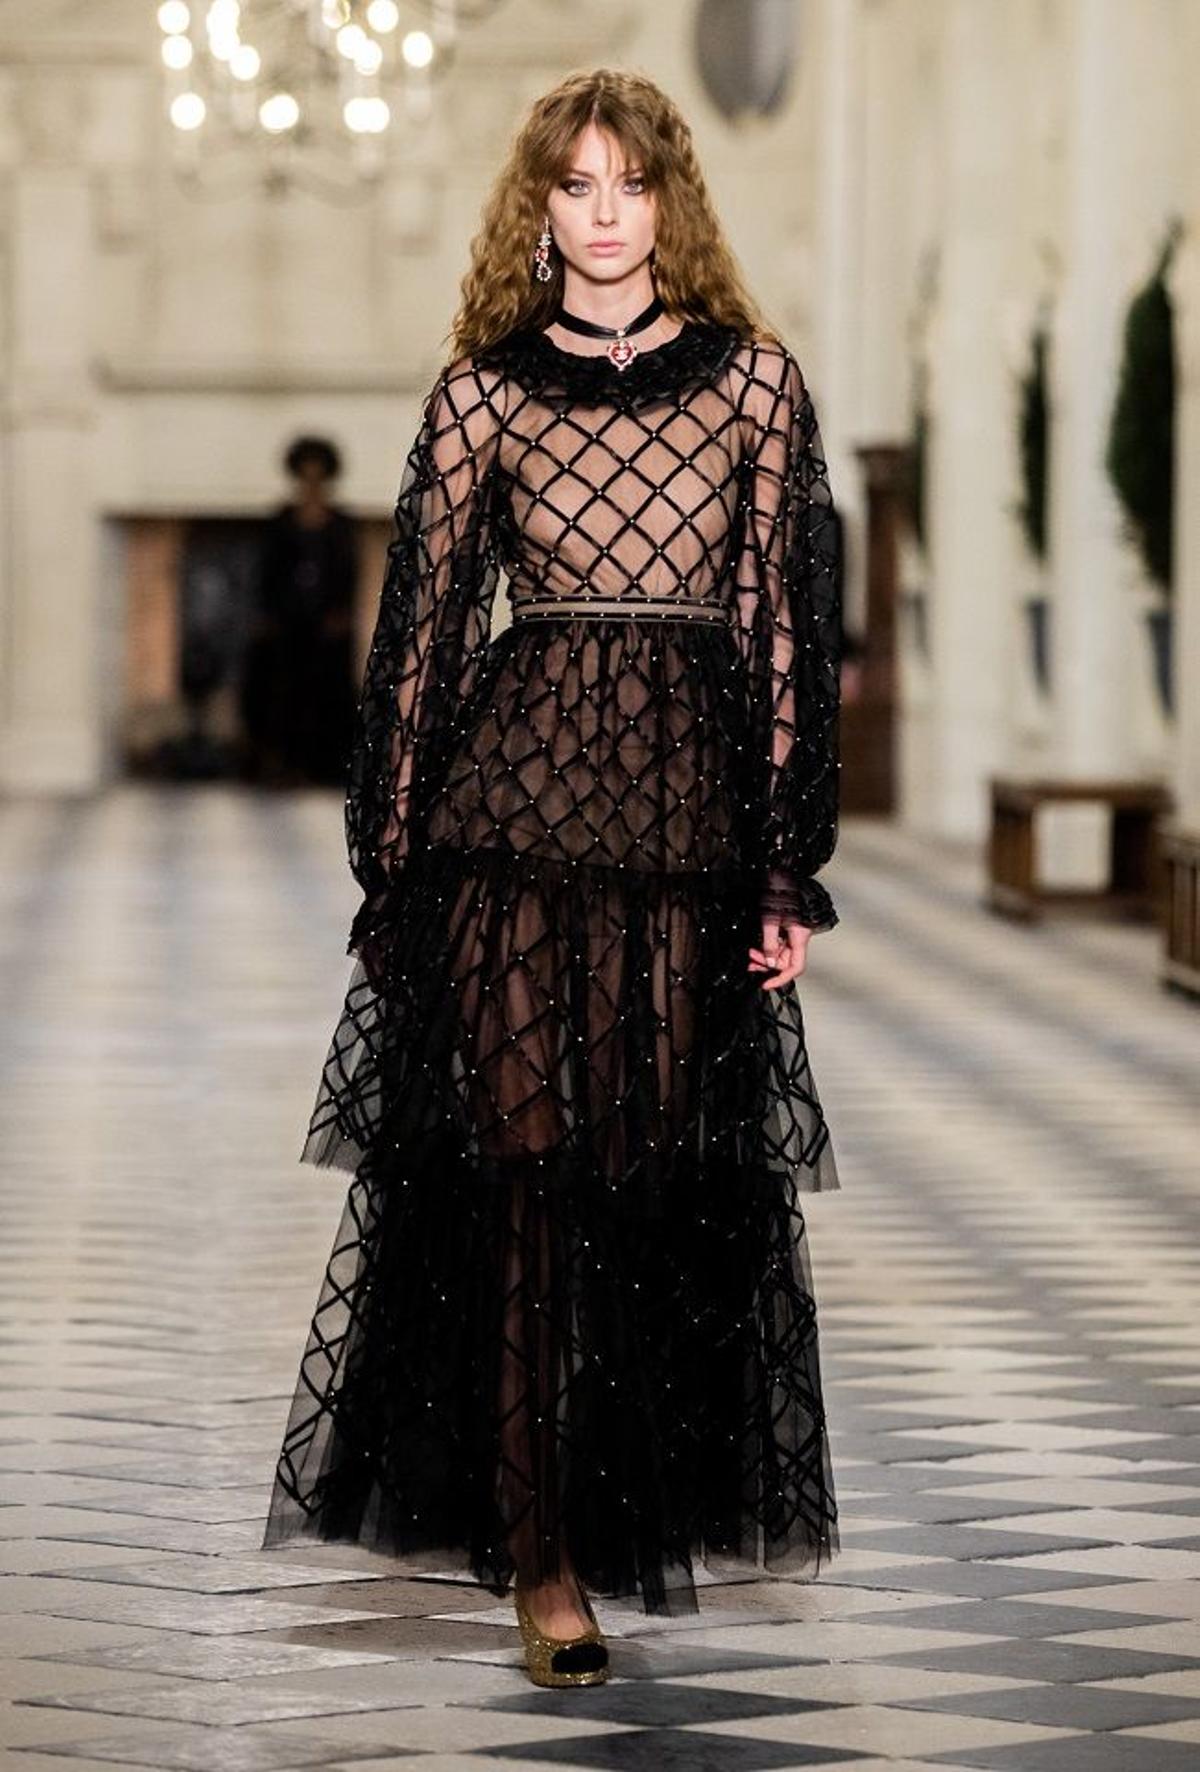 Chanel Métiers d'Art 2020/21: vestido negro de transparencias